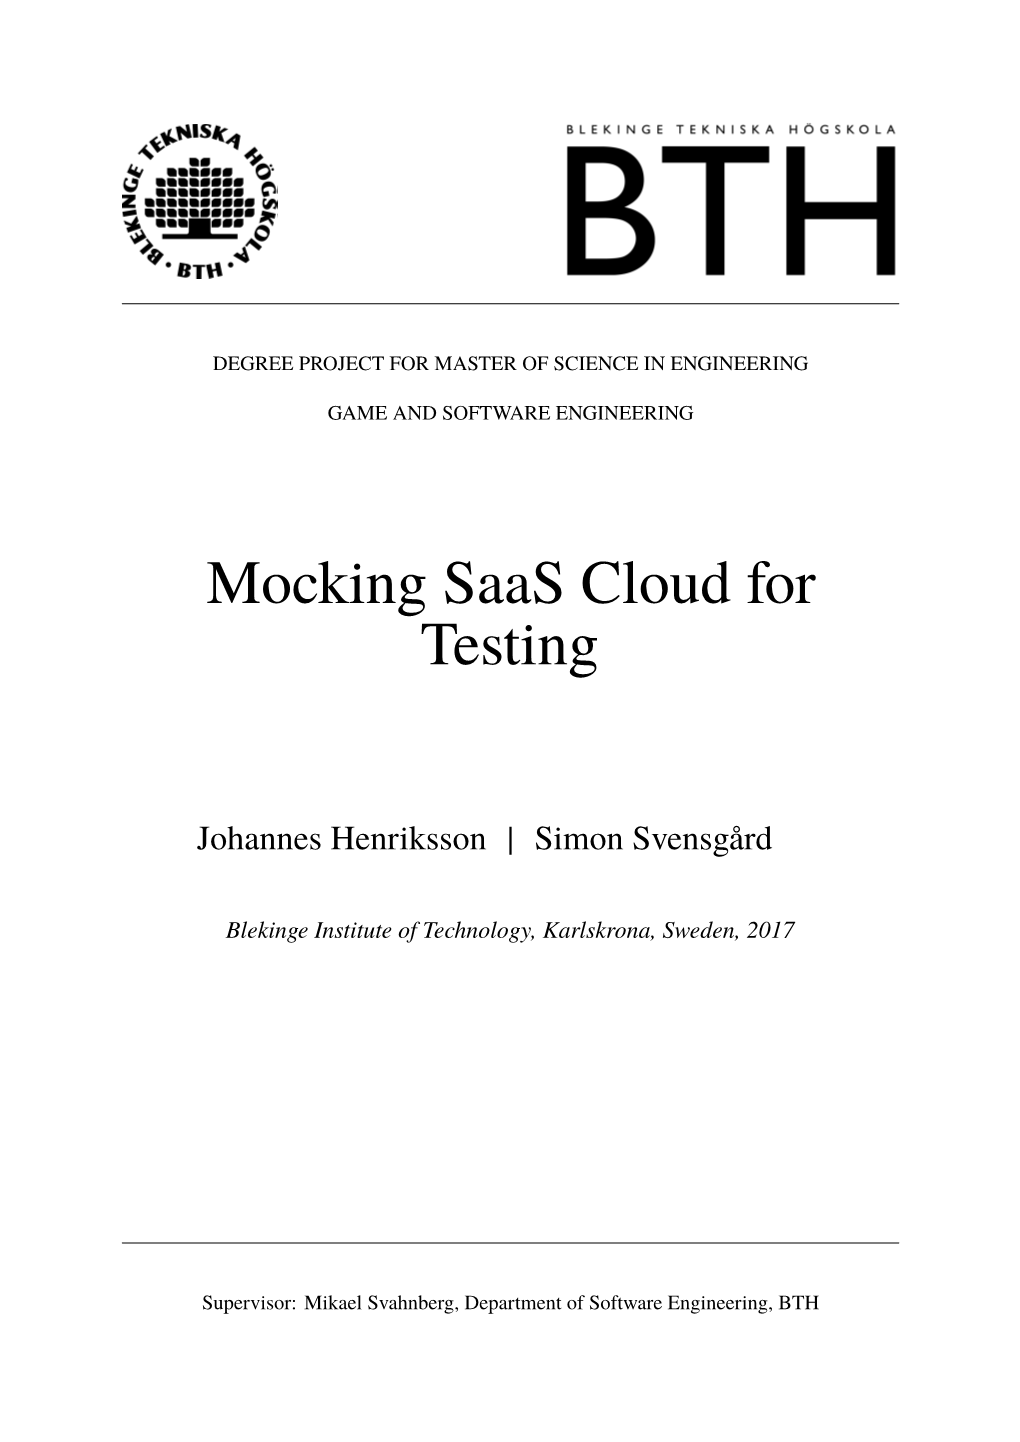 Mocking Saas Cloud for Testing